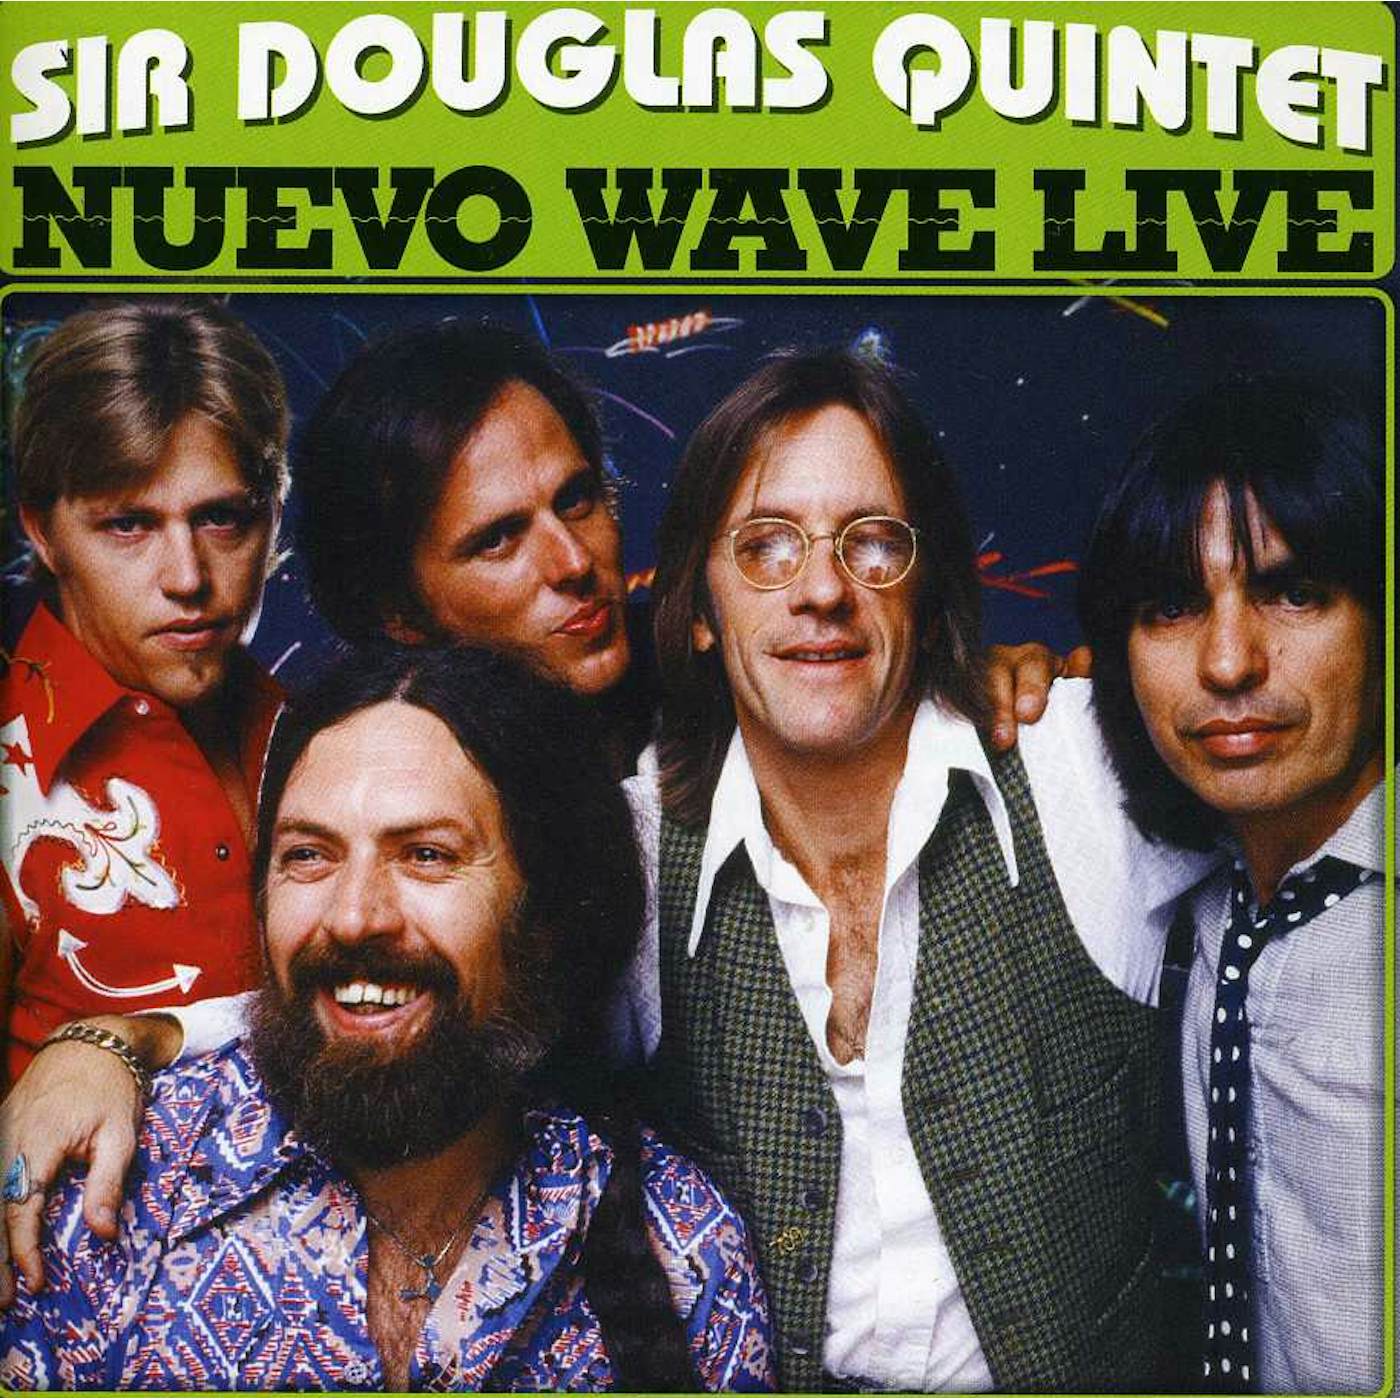 Douglas Quintet NUEVO WAVE LIVE CD